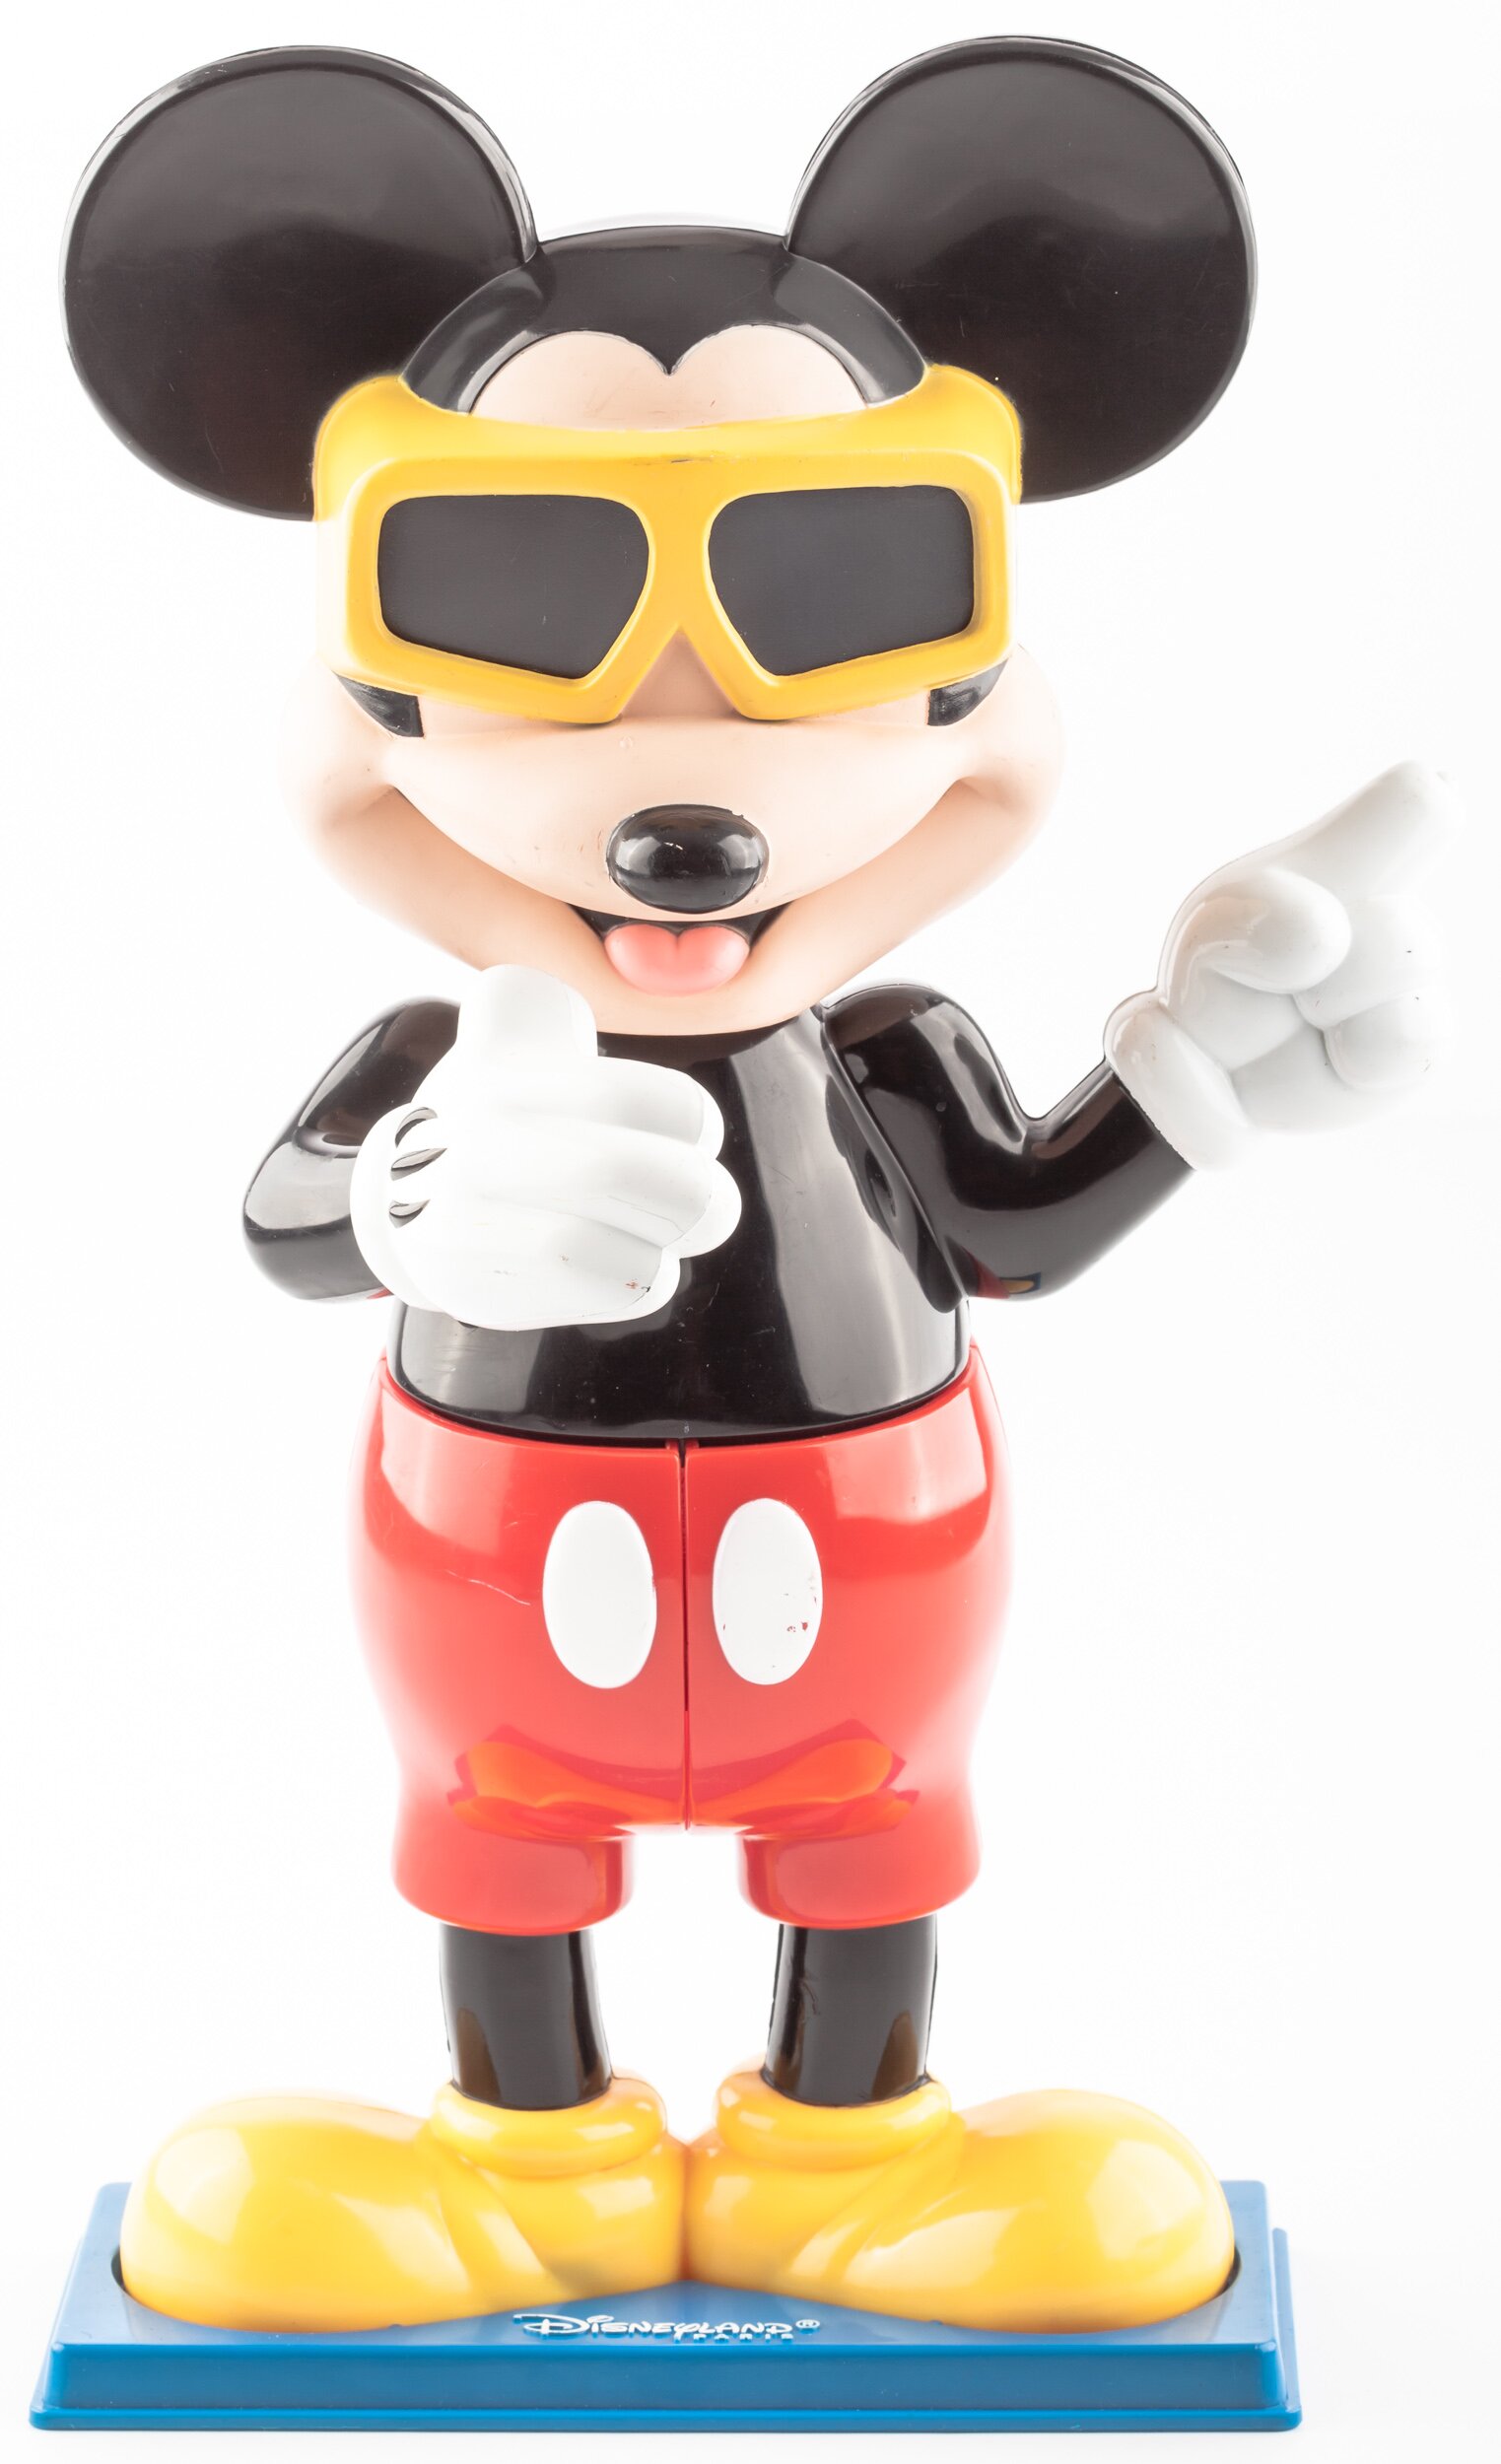 Micky Maus Stereobetrachter Bildbetrachter Mickey Mouse vintage Mc Donalds Disneyland Paris